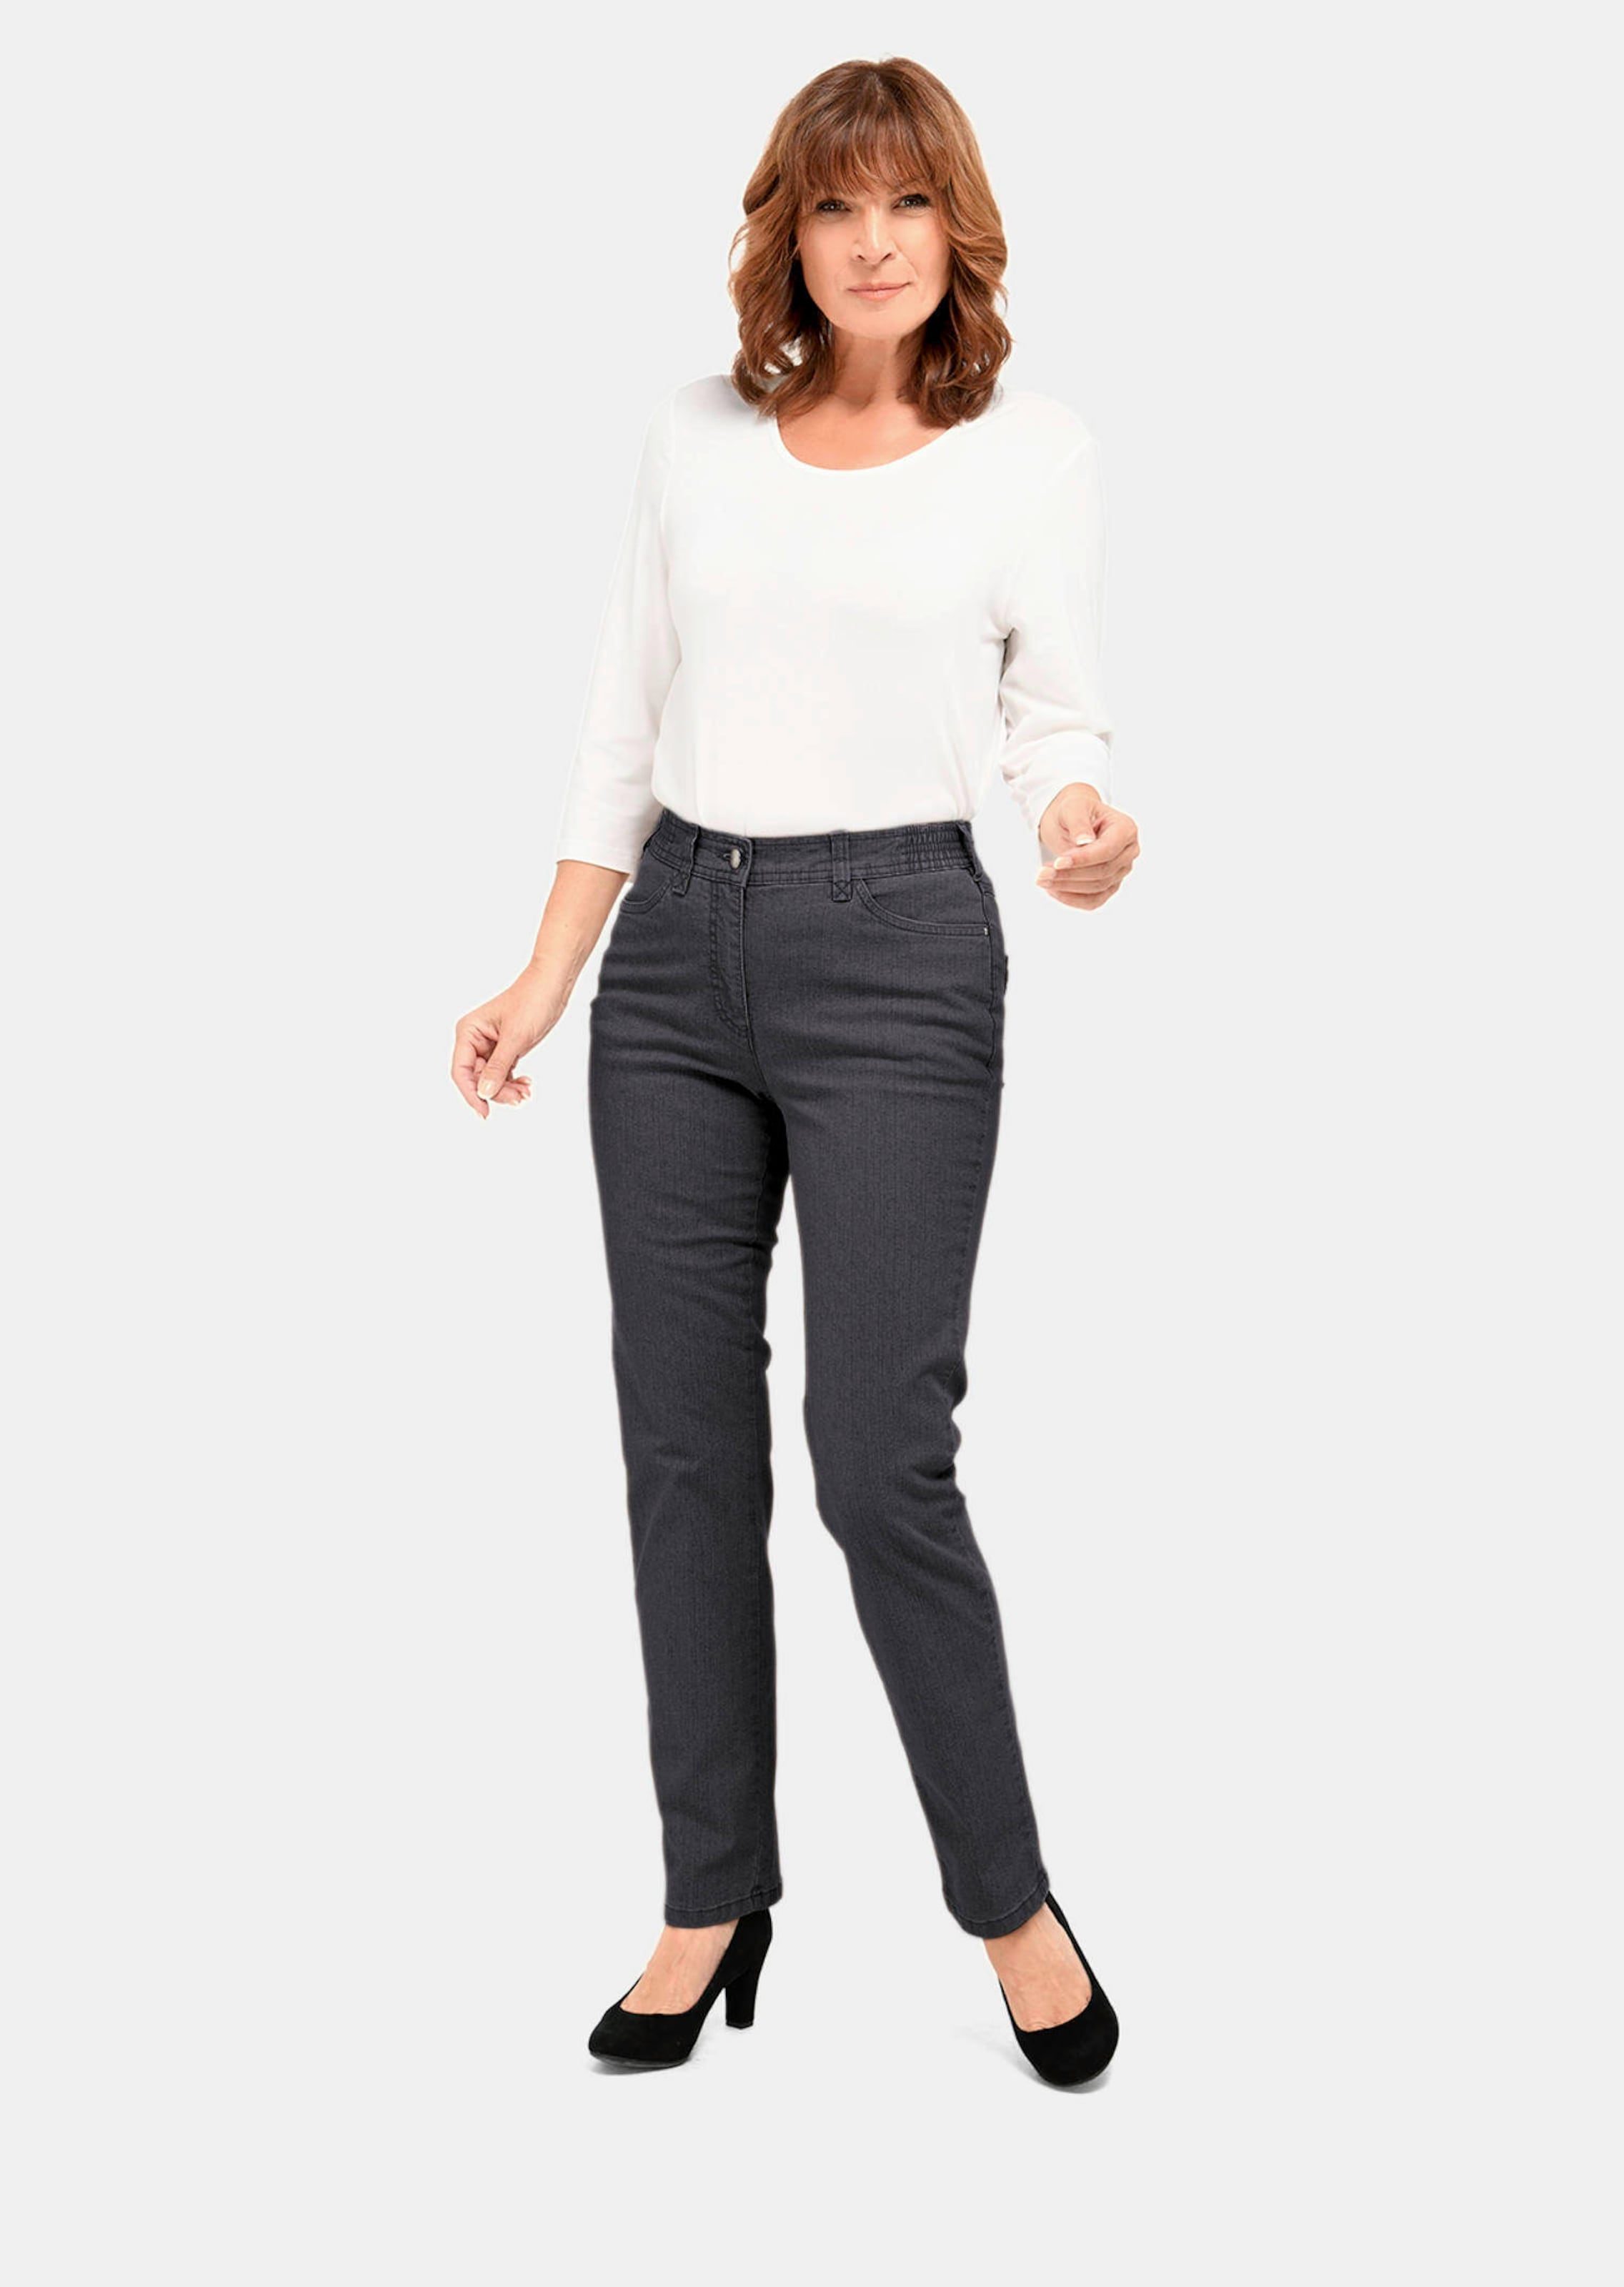 Goldner Fashion Klassieke jeans Carla - antraciet van 